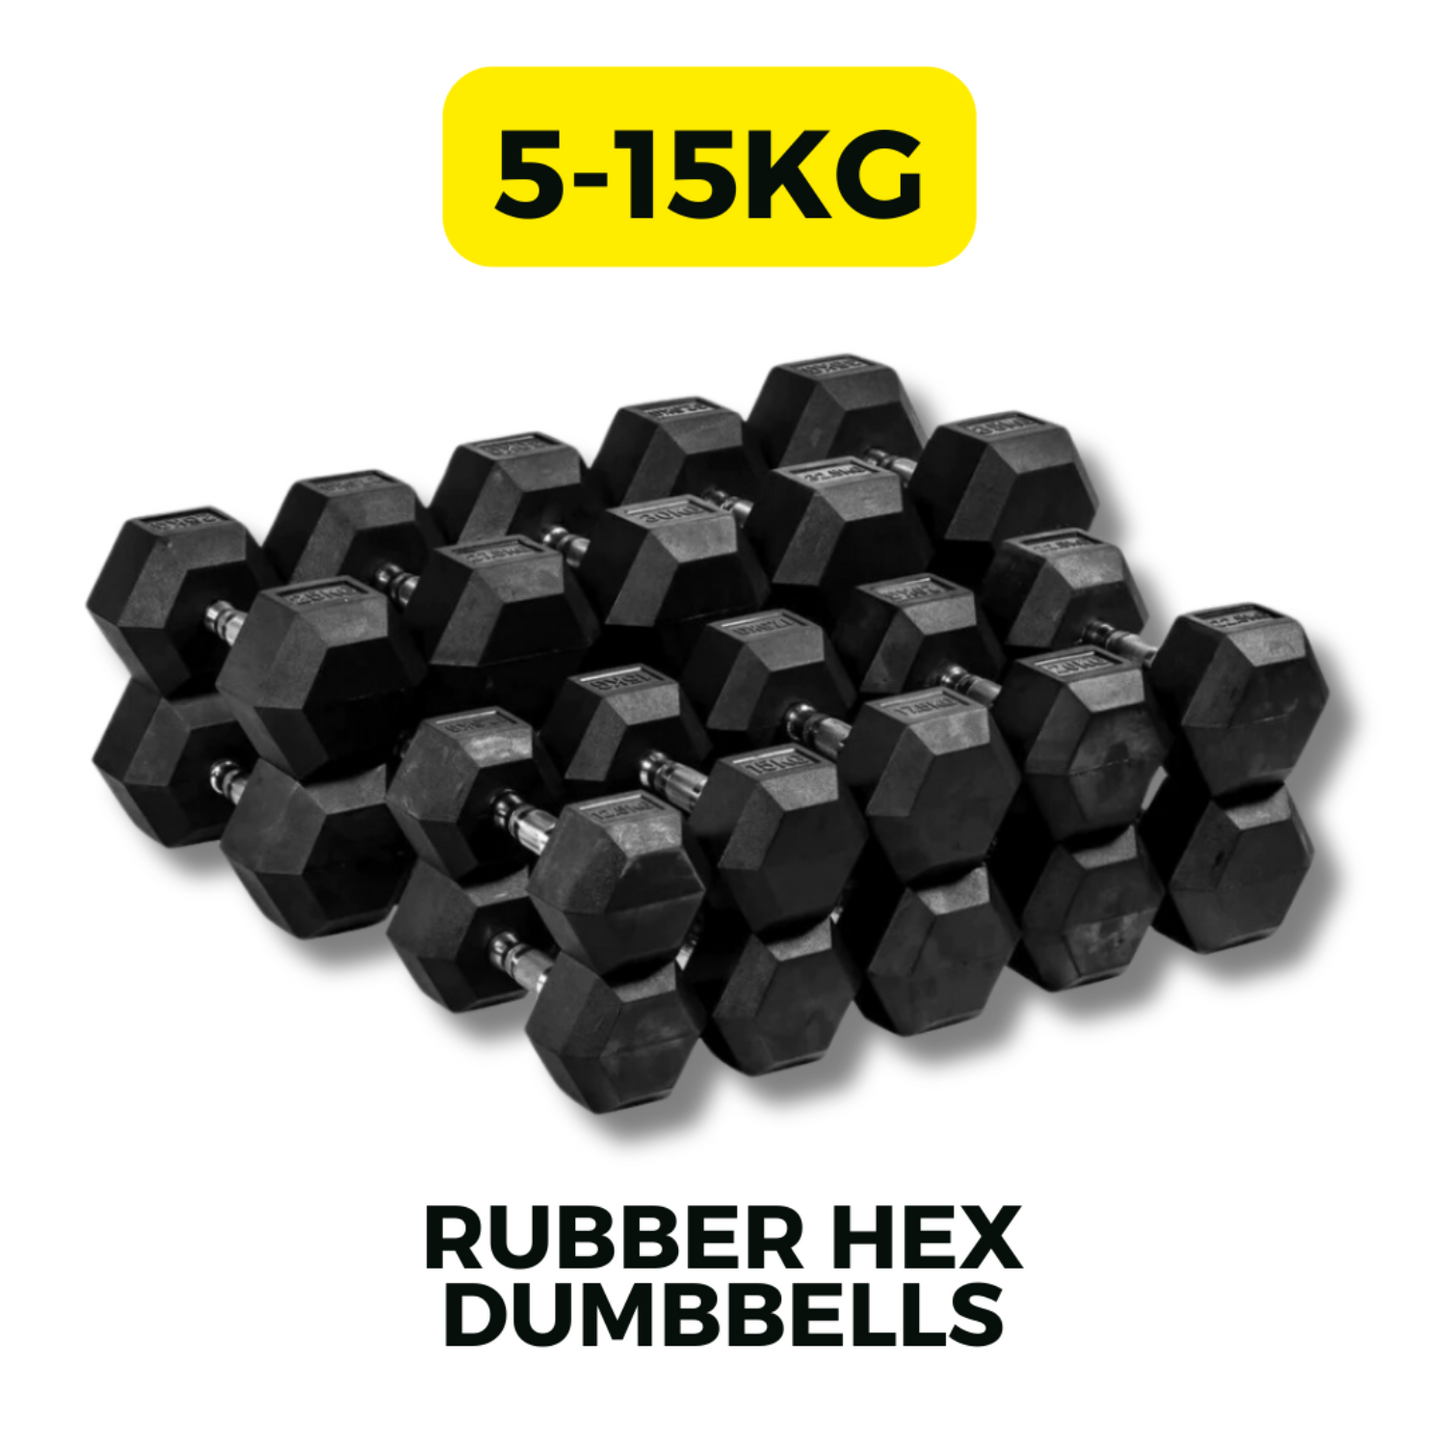 5kg-15kg (8 pair) Rubber Hex Dumbbell Set with 2 Tier Rack